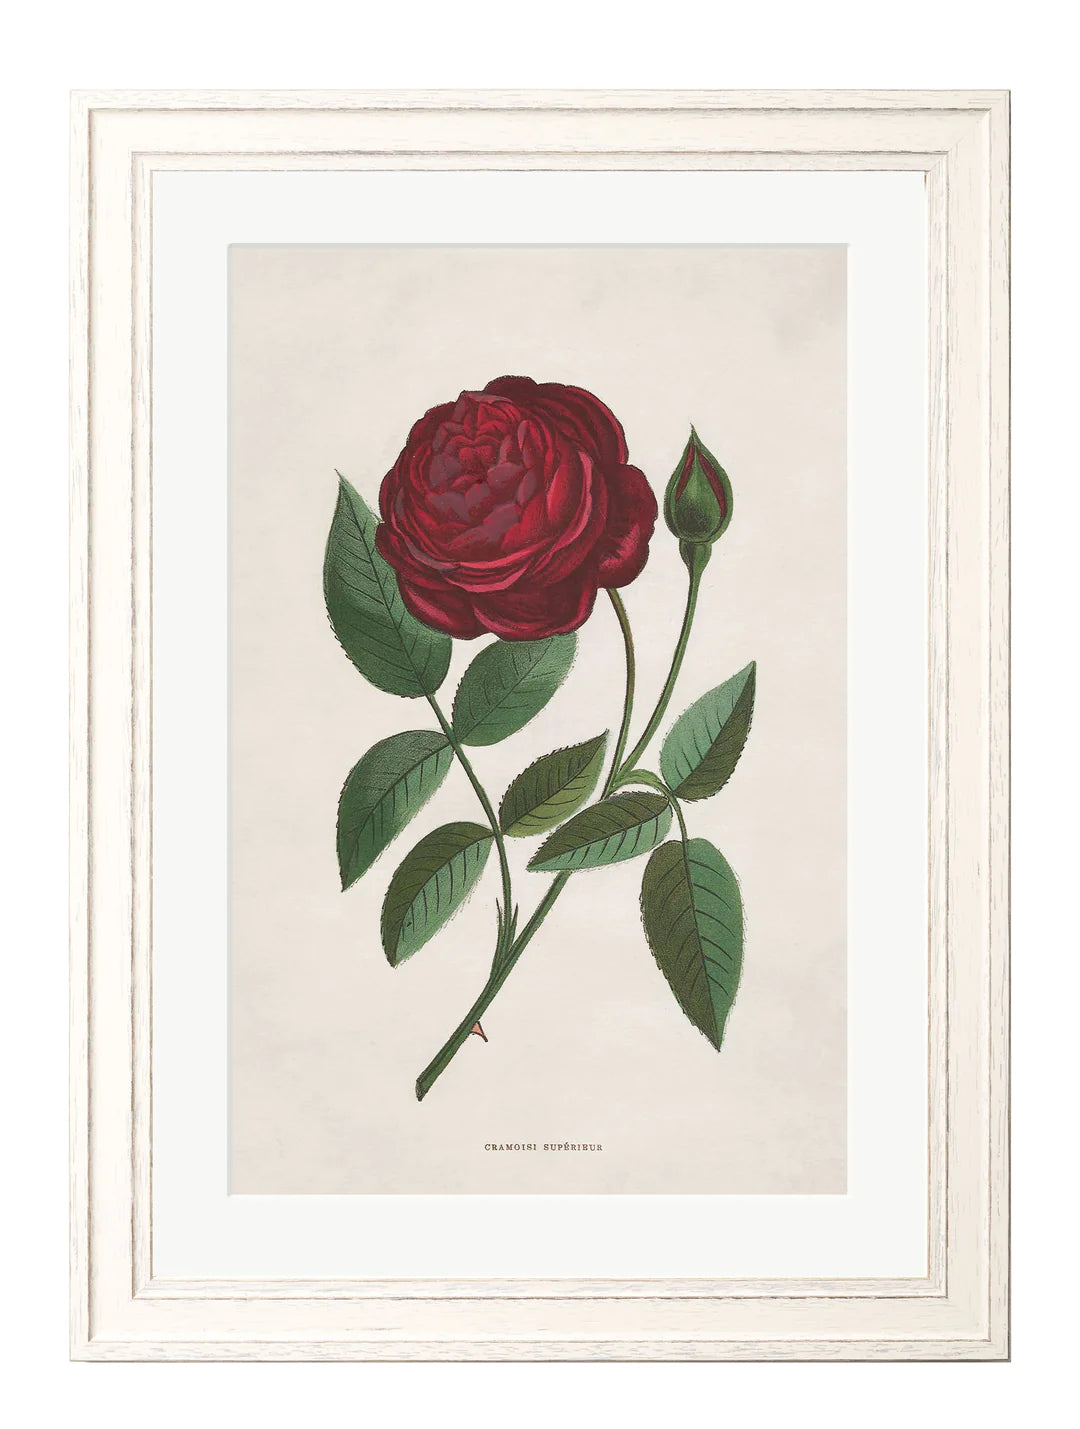 Rose Floral Illustrations - TheArtistsQuarter